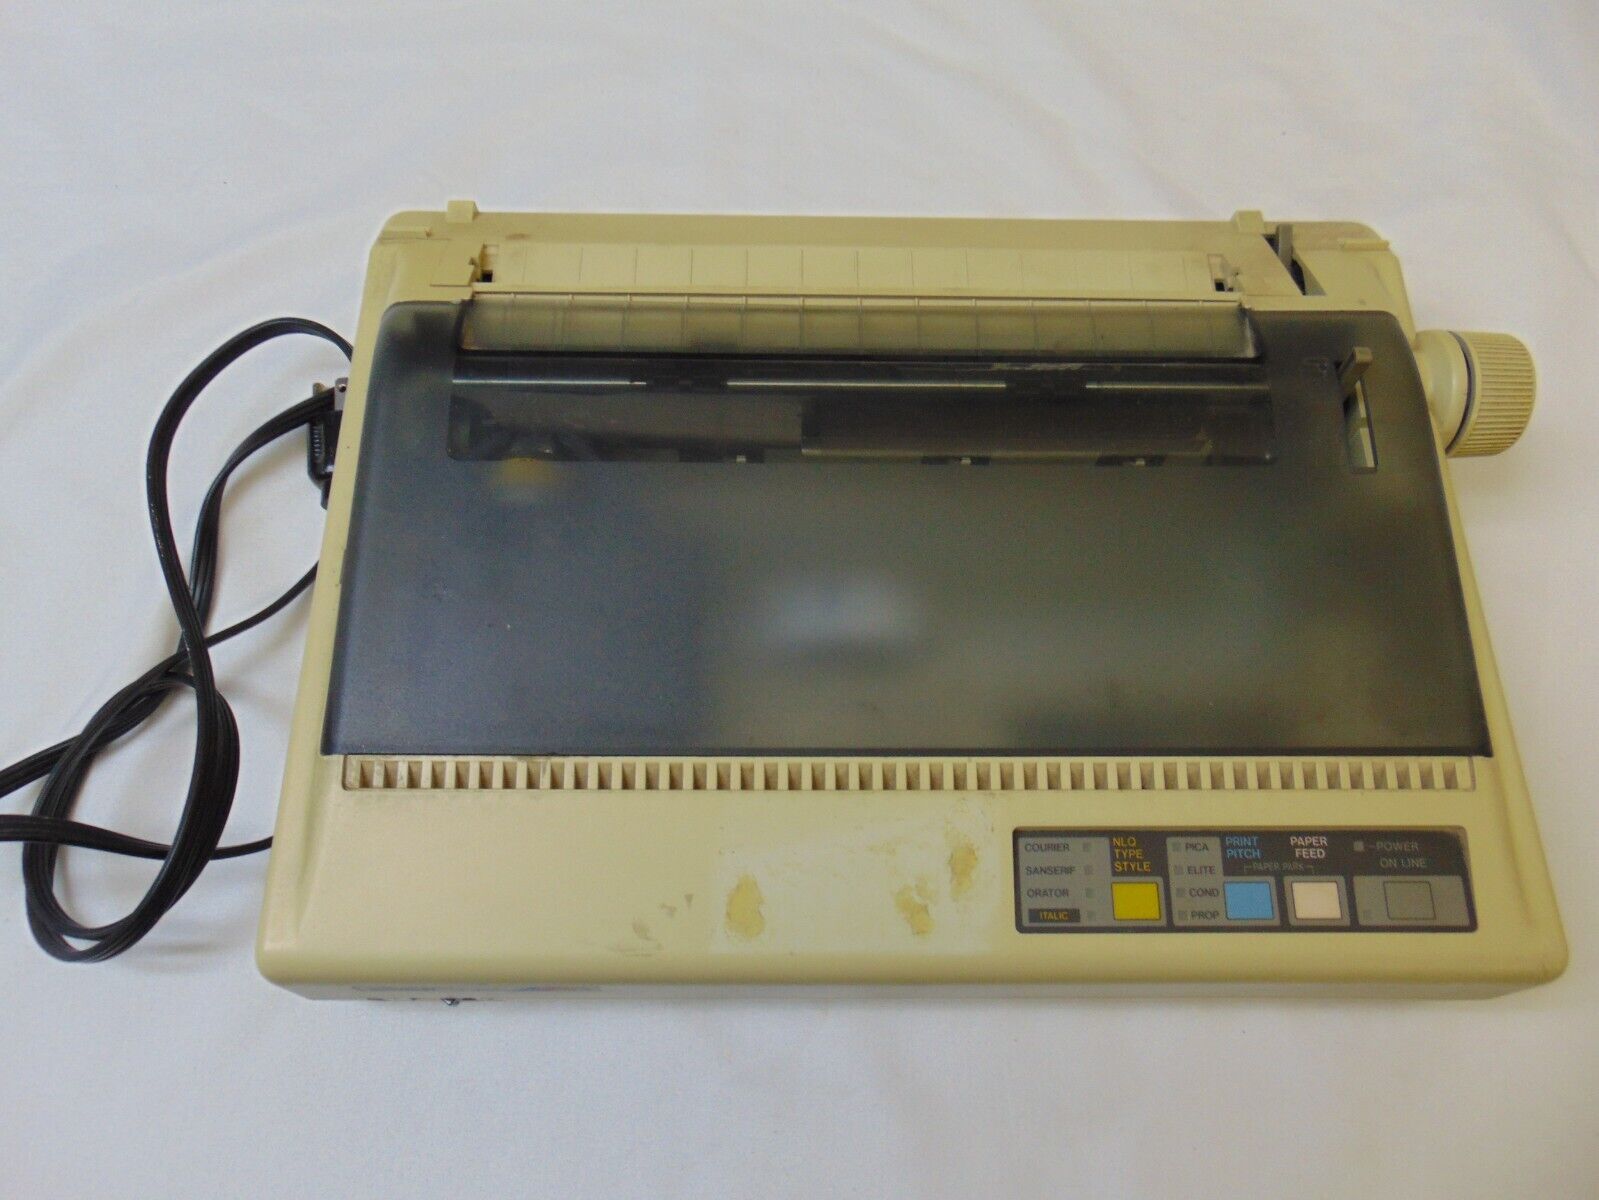 Star NX-1000 Vintage Printer